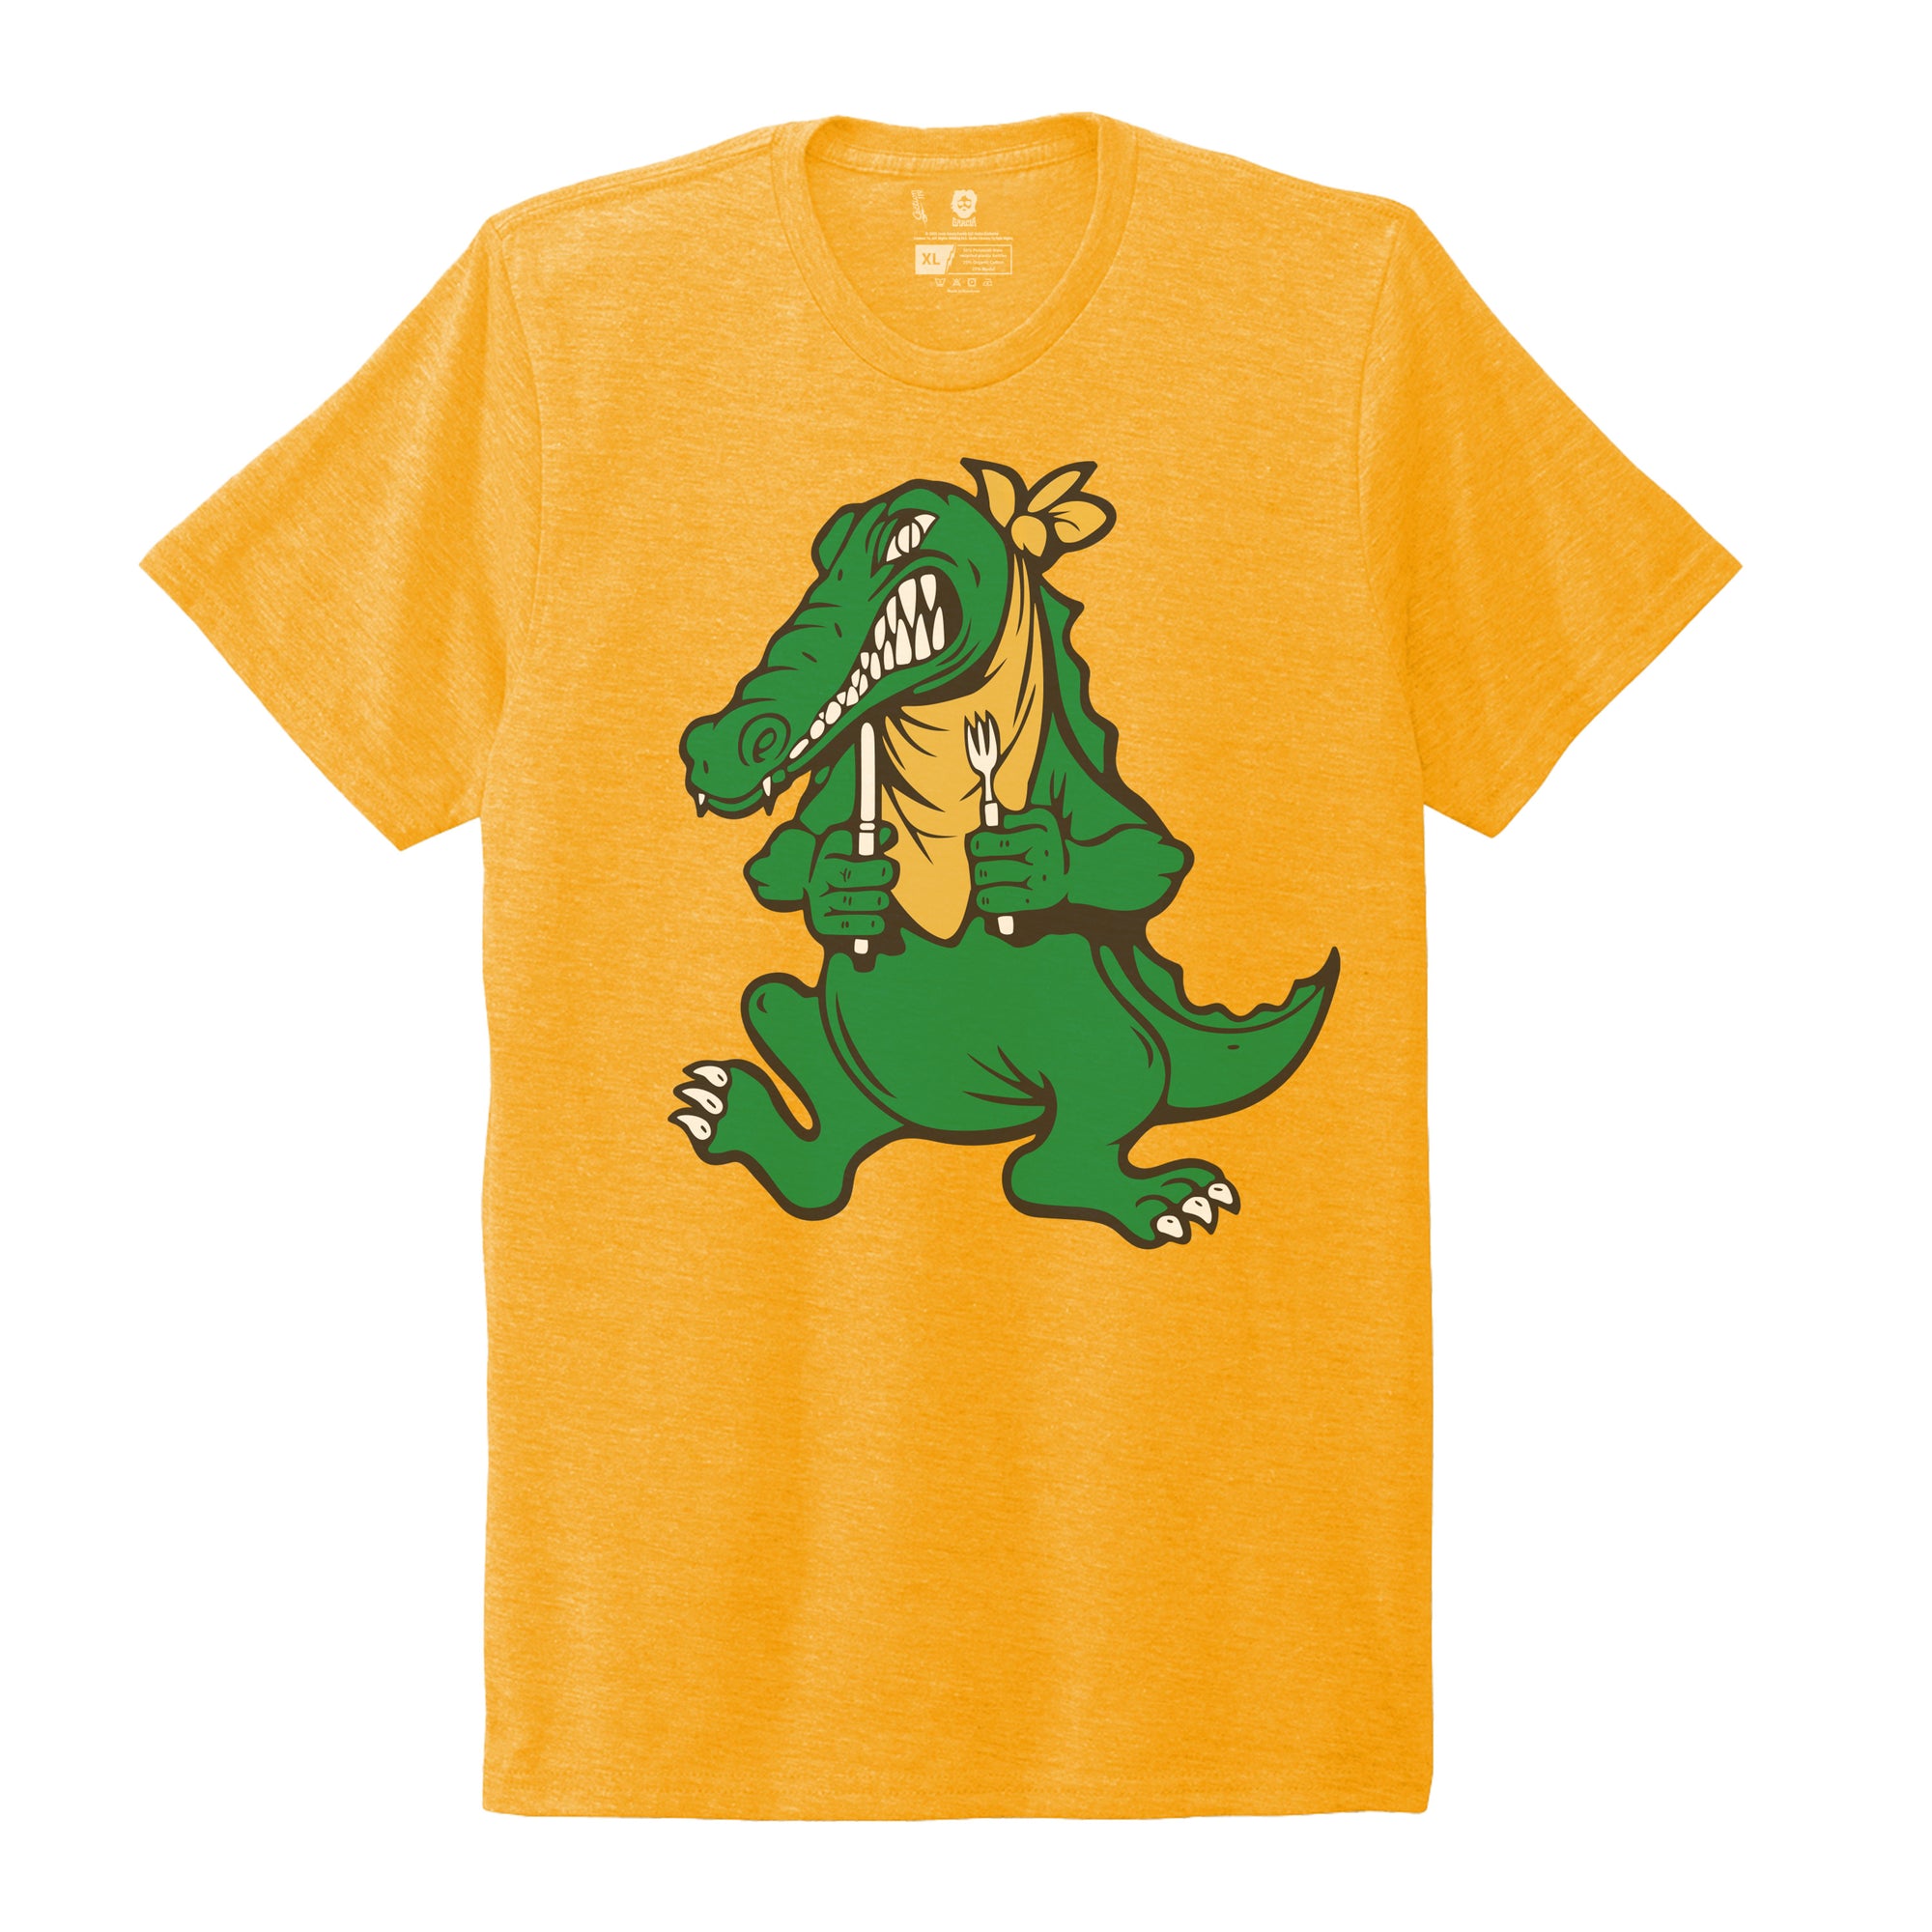 Jerry Garcia Eco T-Shirt Yellow Orange Alligator– Section 119